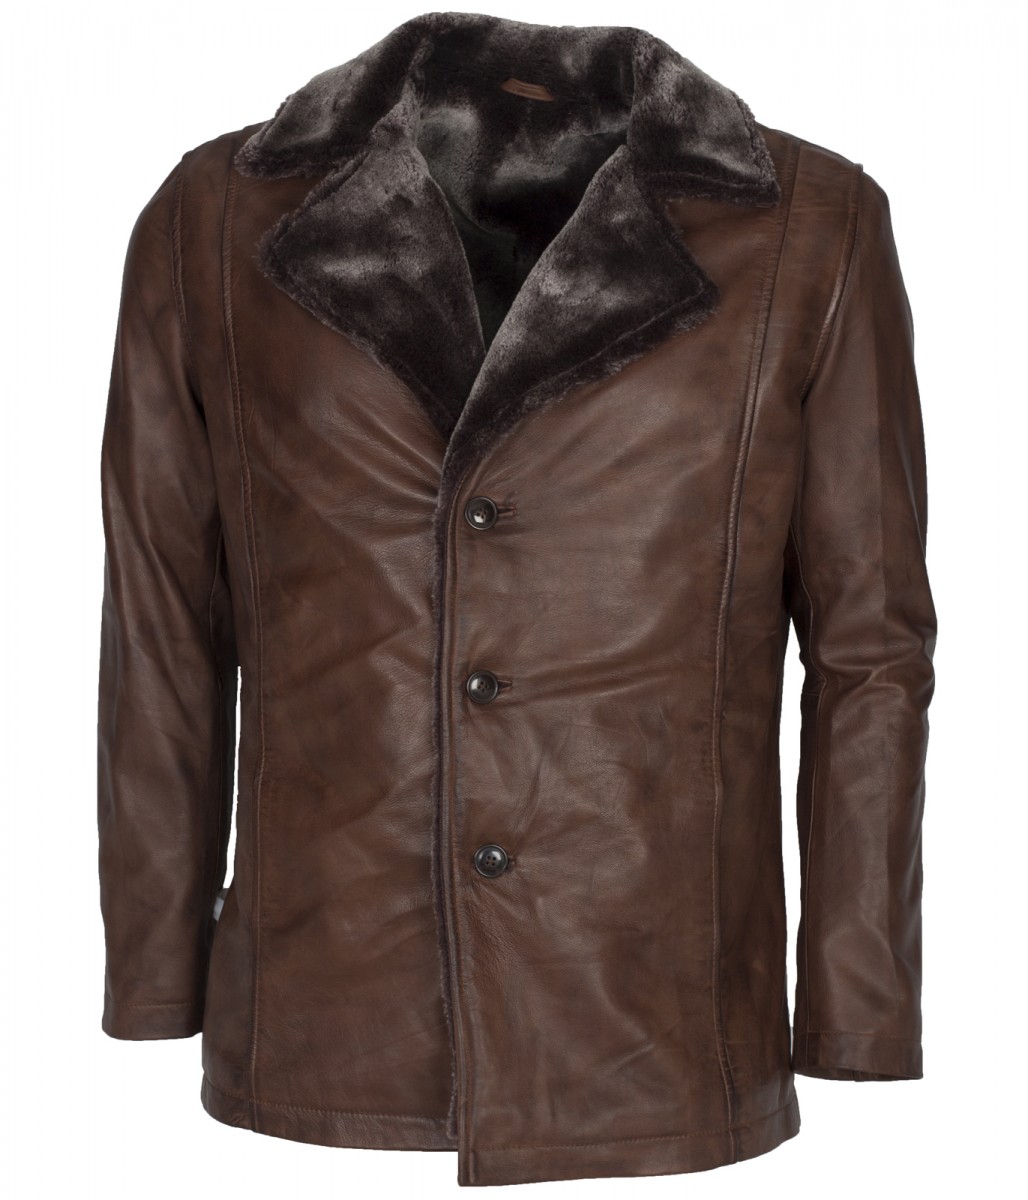 Wolverine Men's Brown Fur Leather Coat - Stinson Leathers